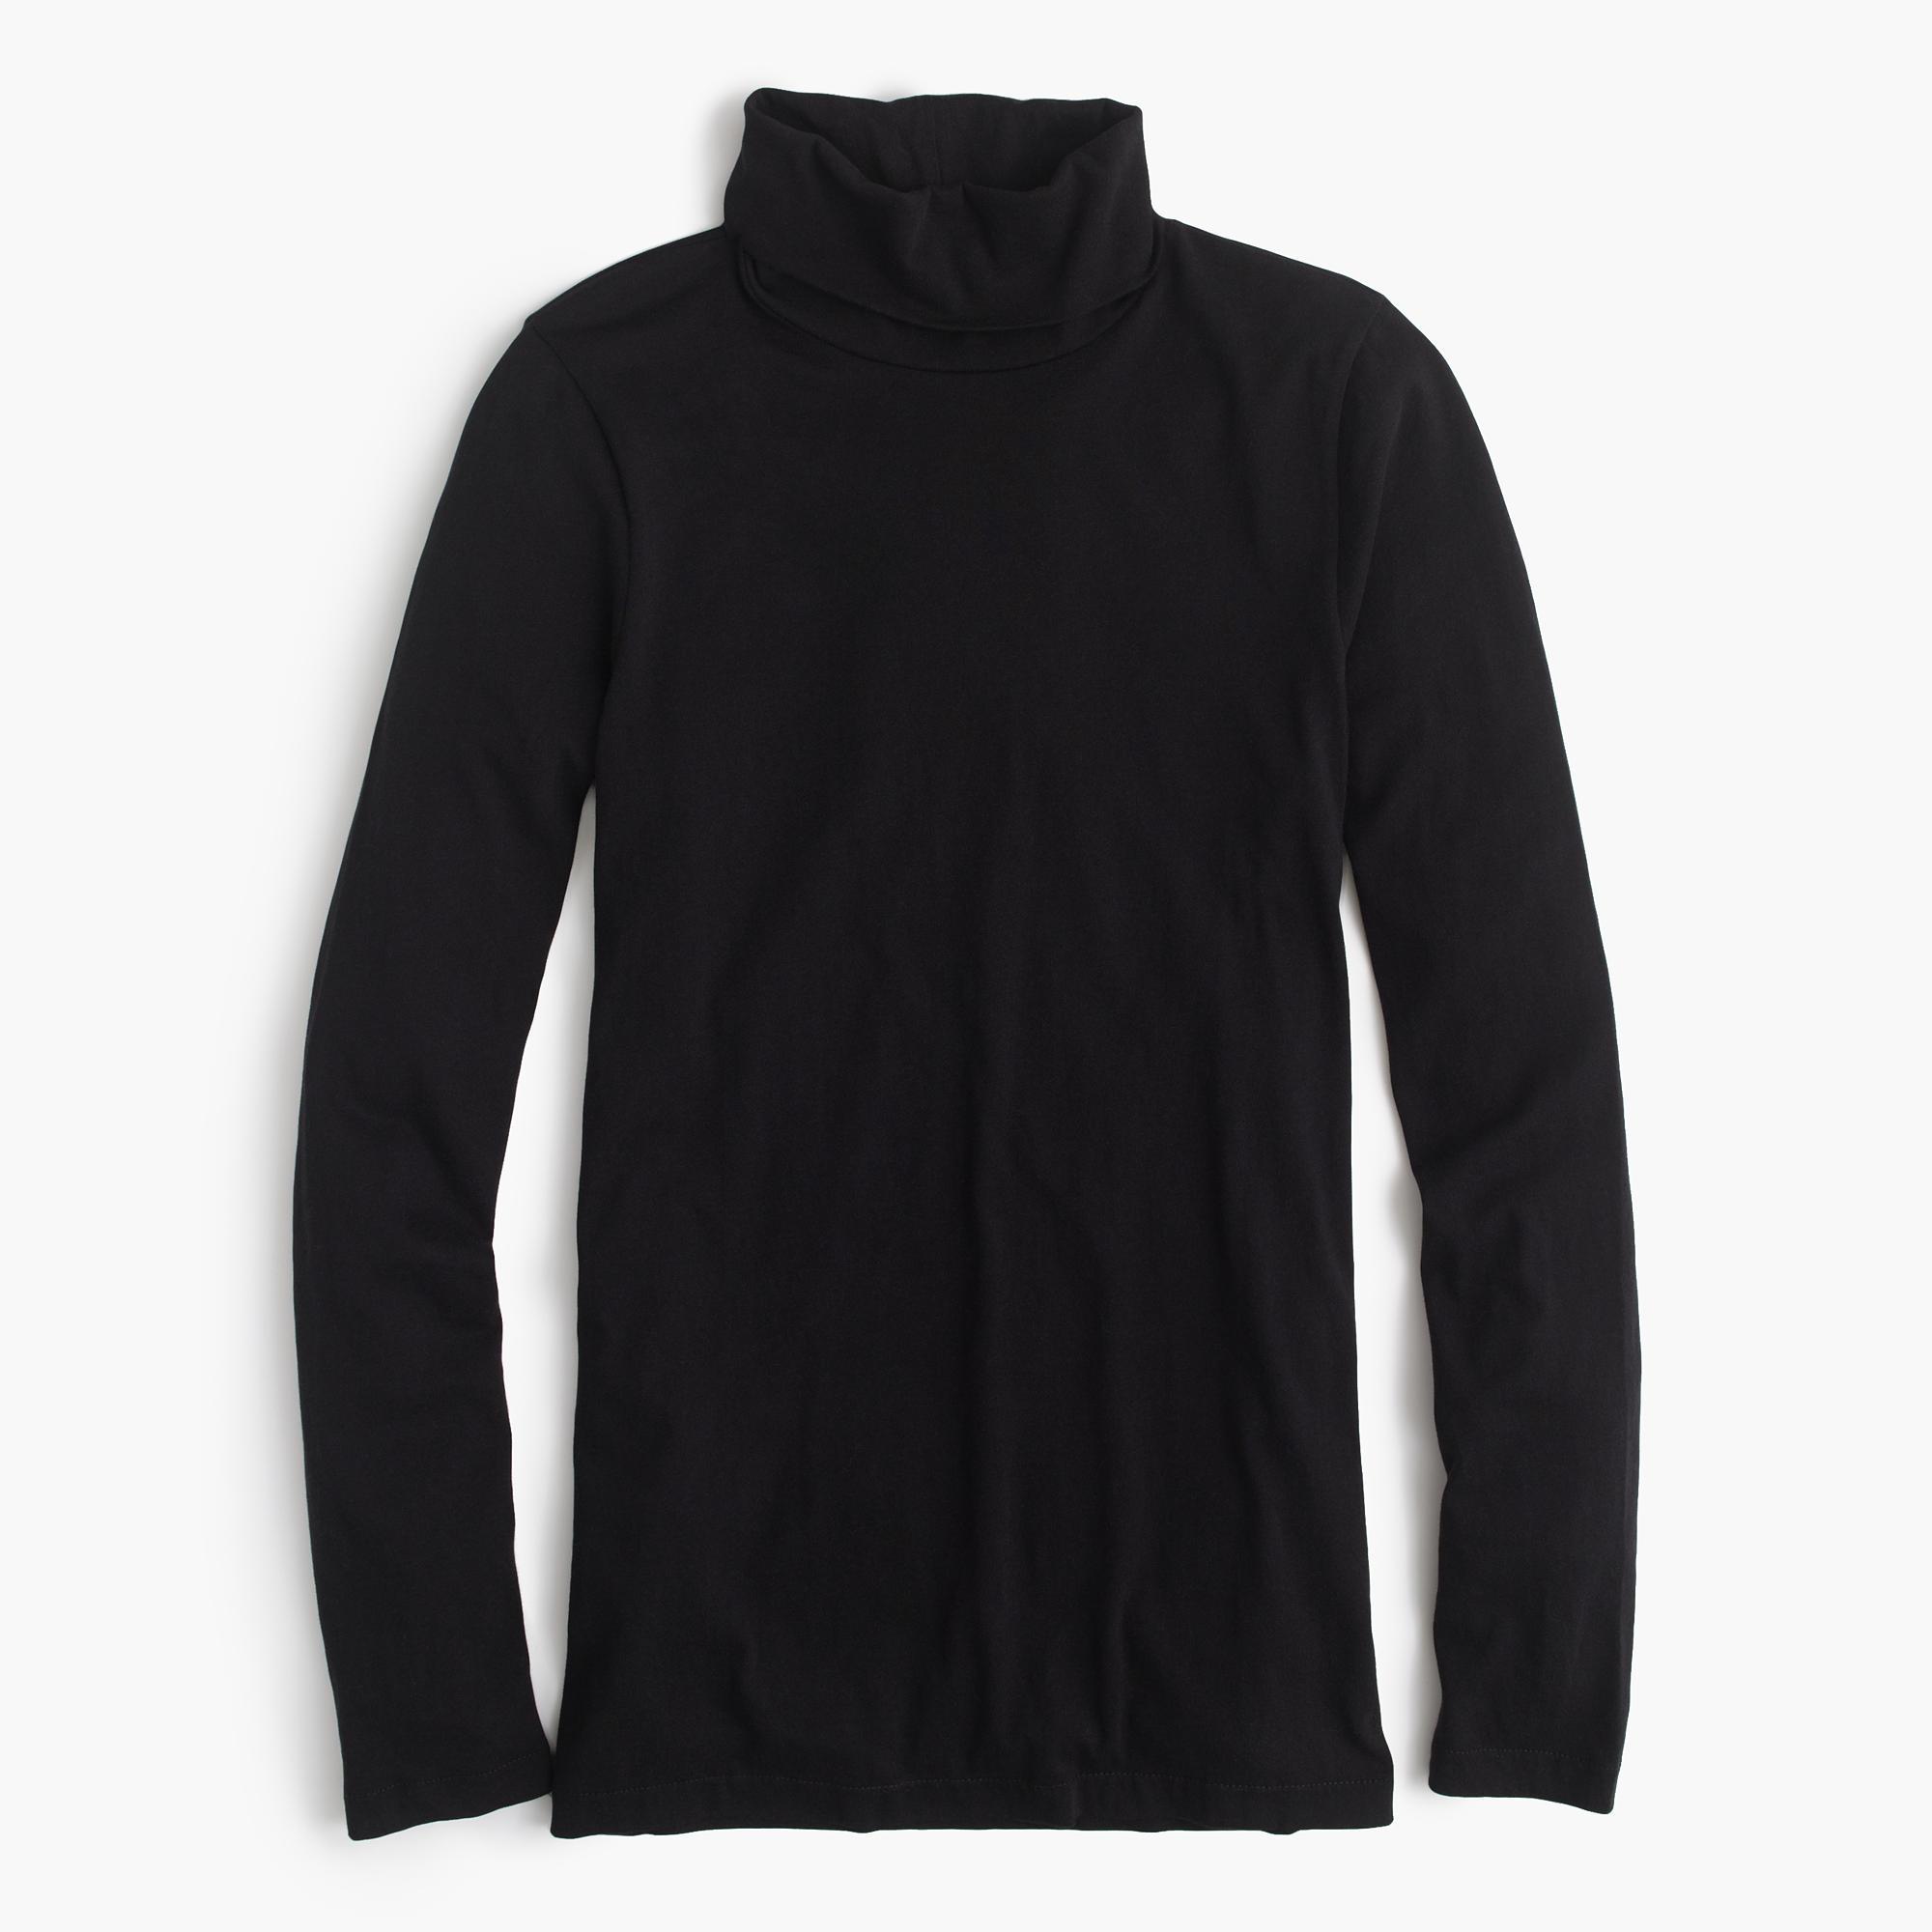 Pumps j crew tissue turtleneck black shirt design brands